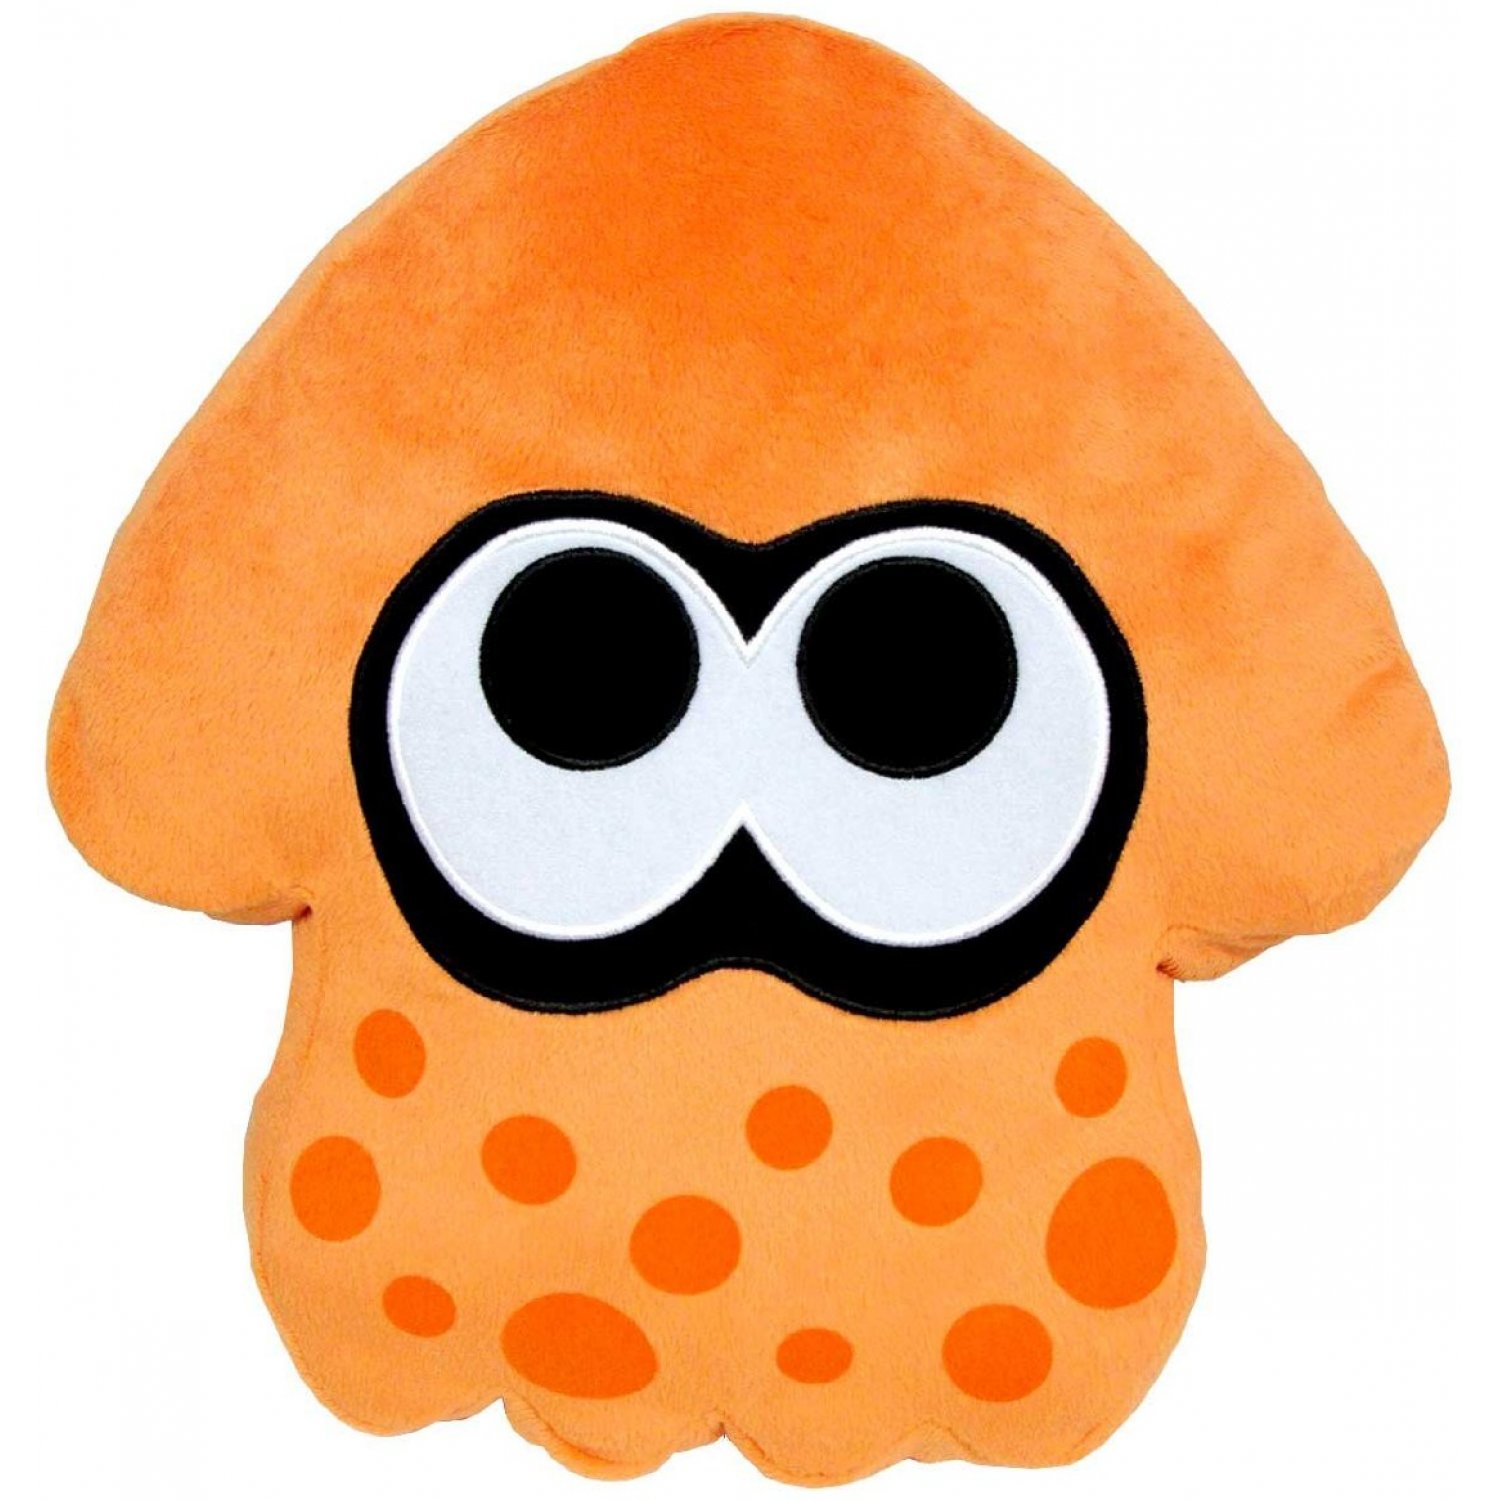 Sanei Inkling Squid orange cushion.jpg